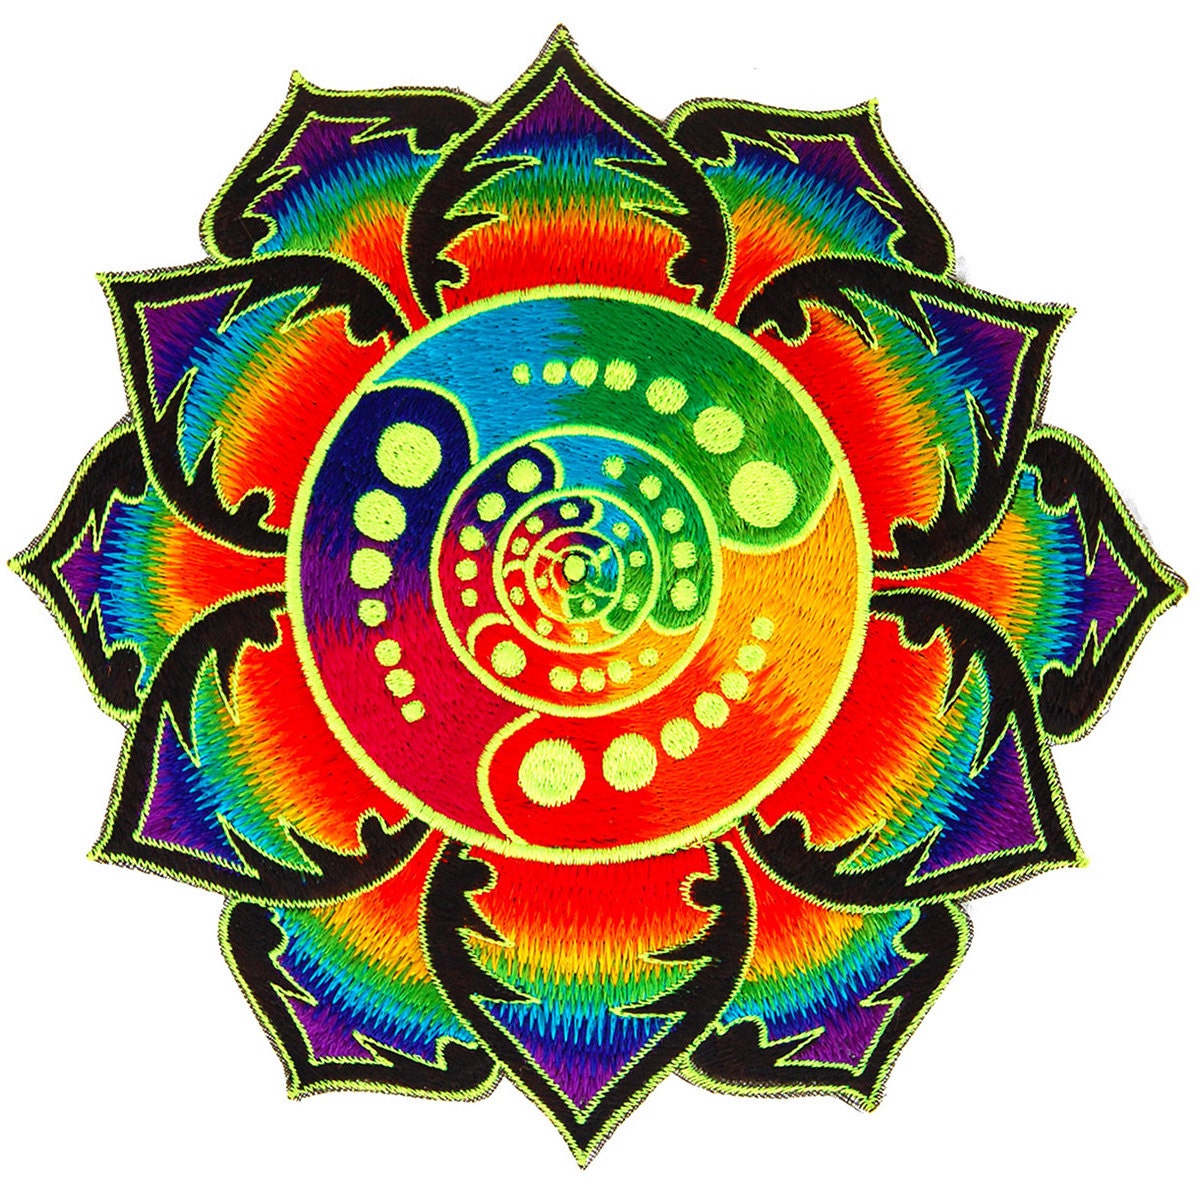 Attributes crop circle T-Shirt rainbow mandala blacklight handmade embroidery no print goa t-shirt